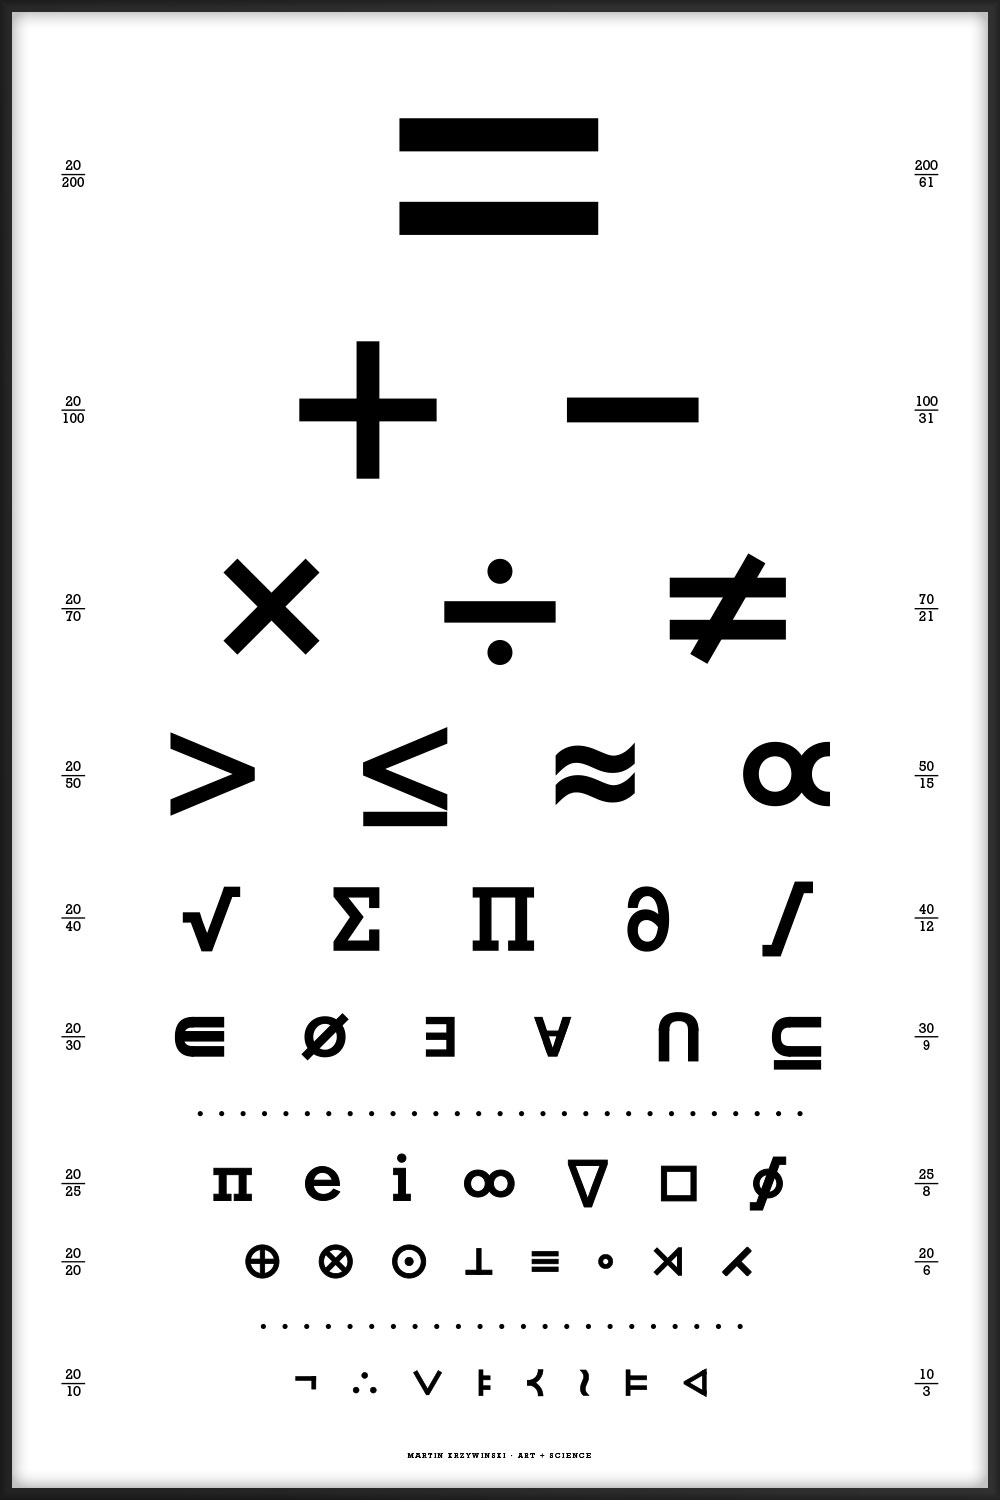 Snellen eye chart — mathematical symbols by Martin Krzywinski